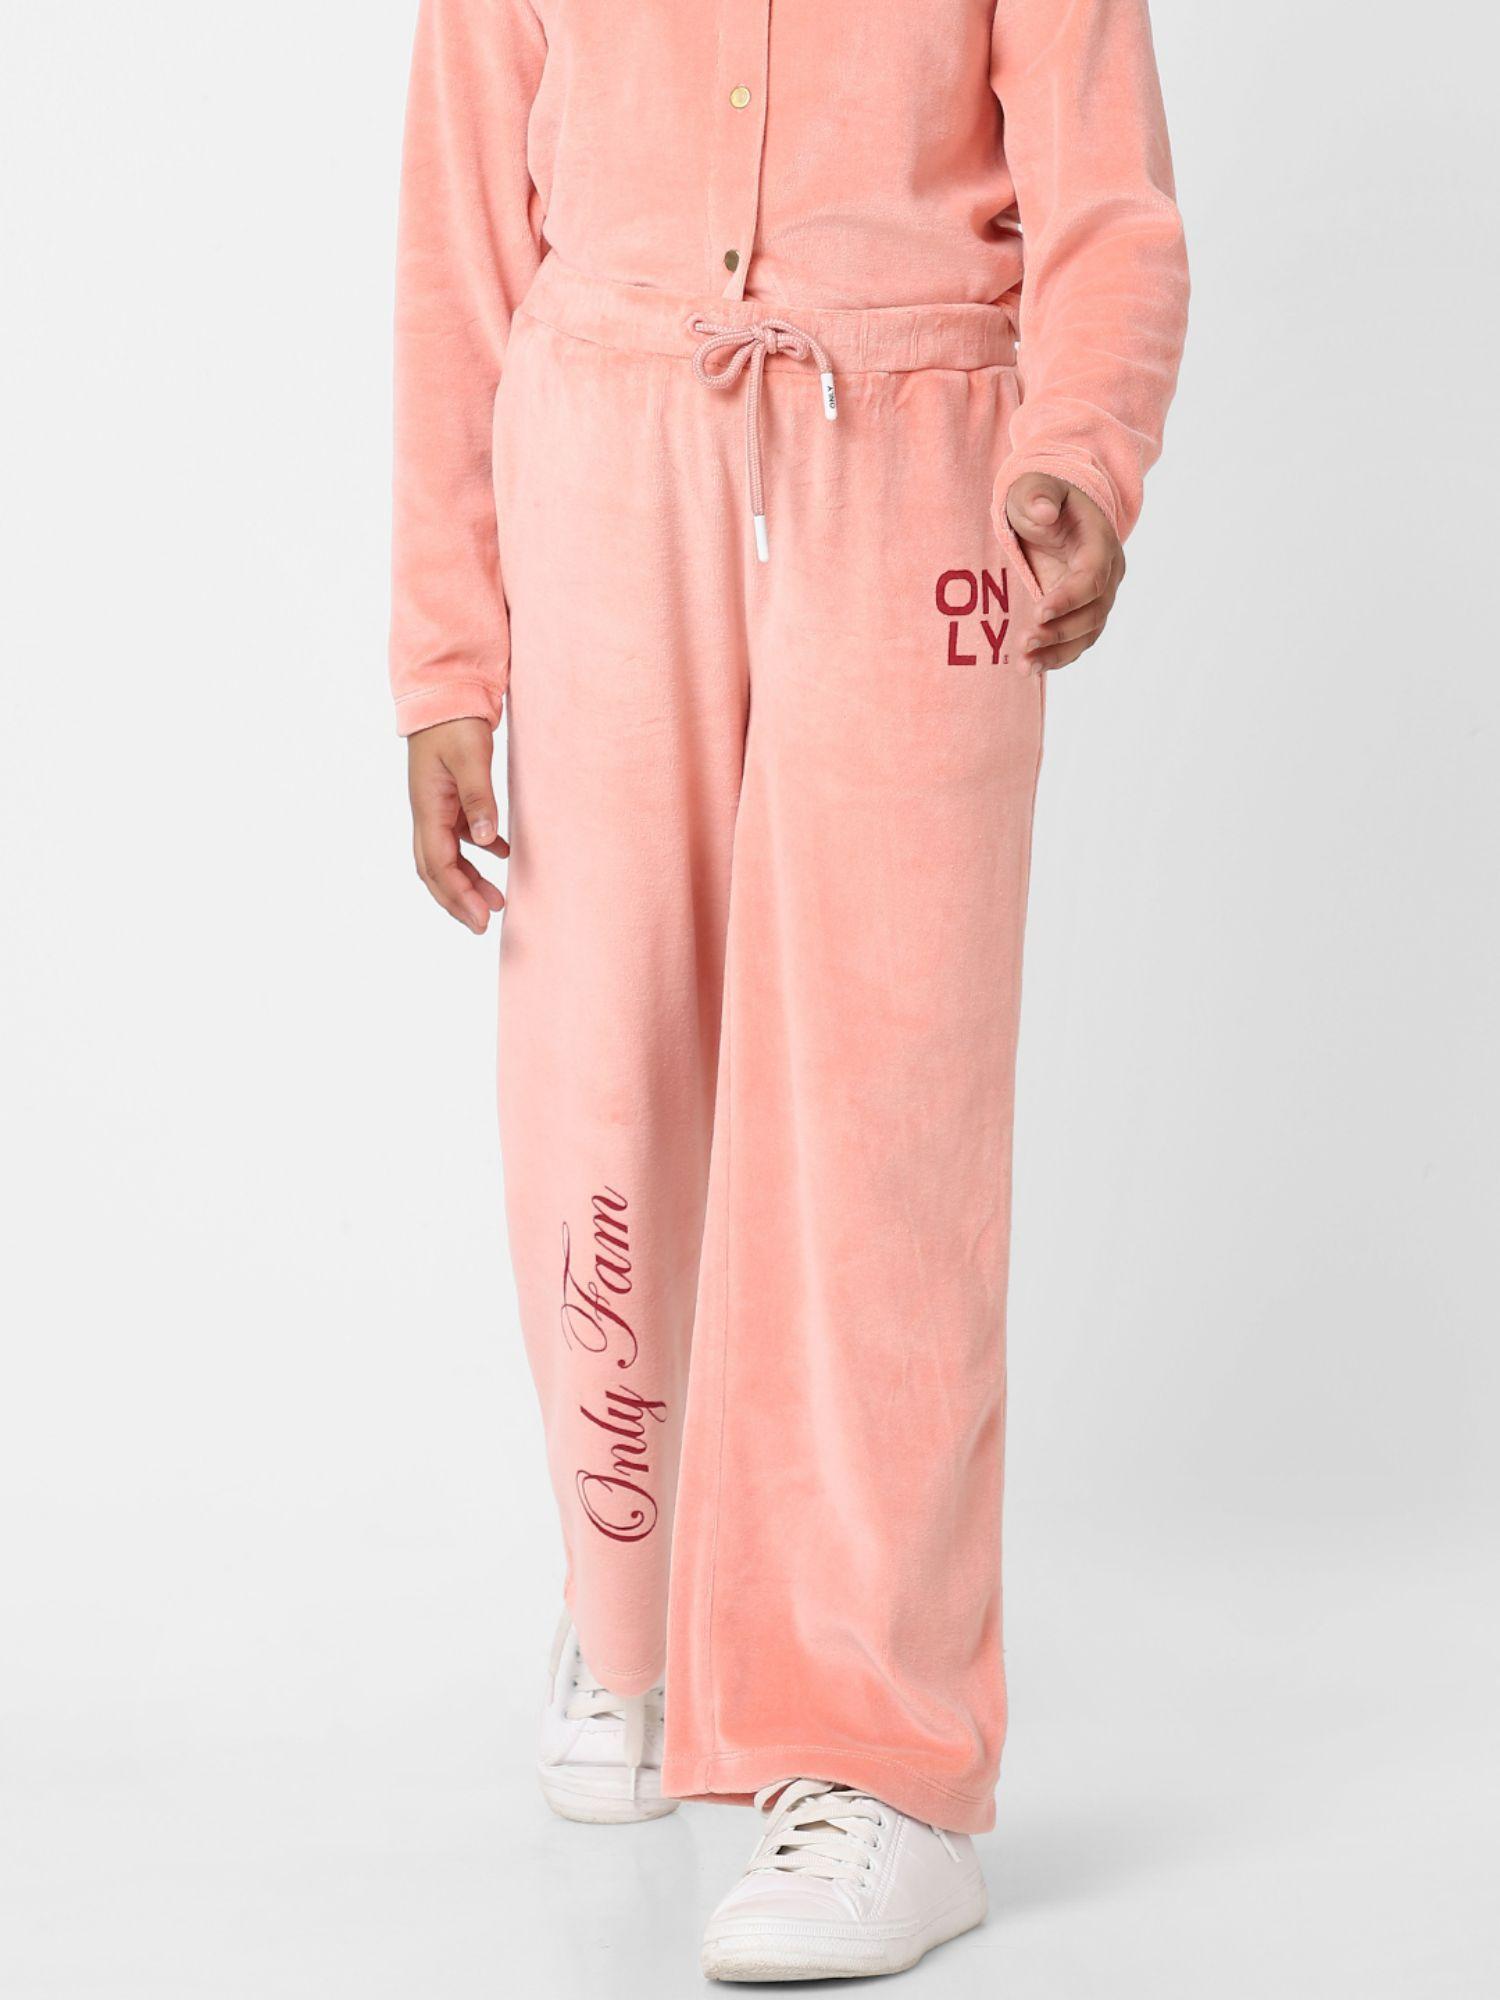 girls typographic printed casualwear pink pants